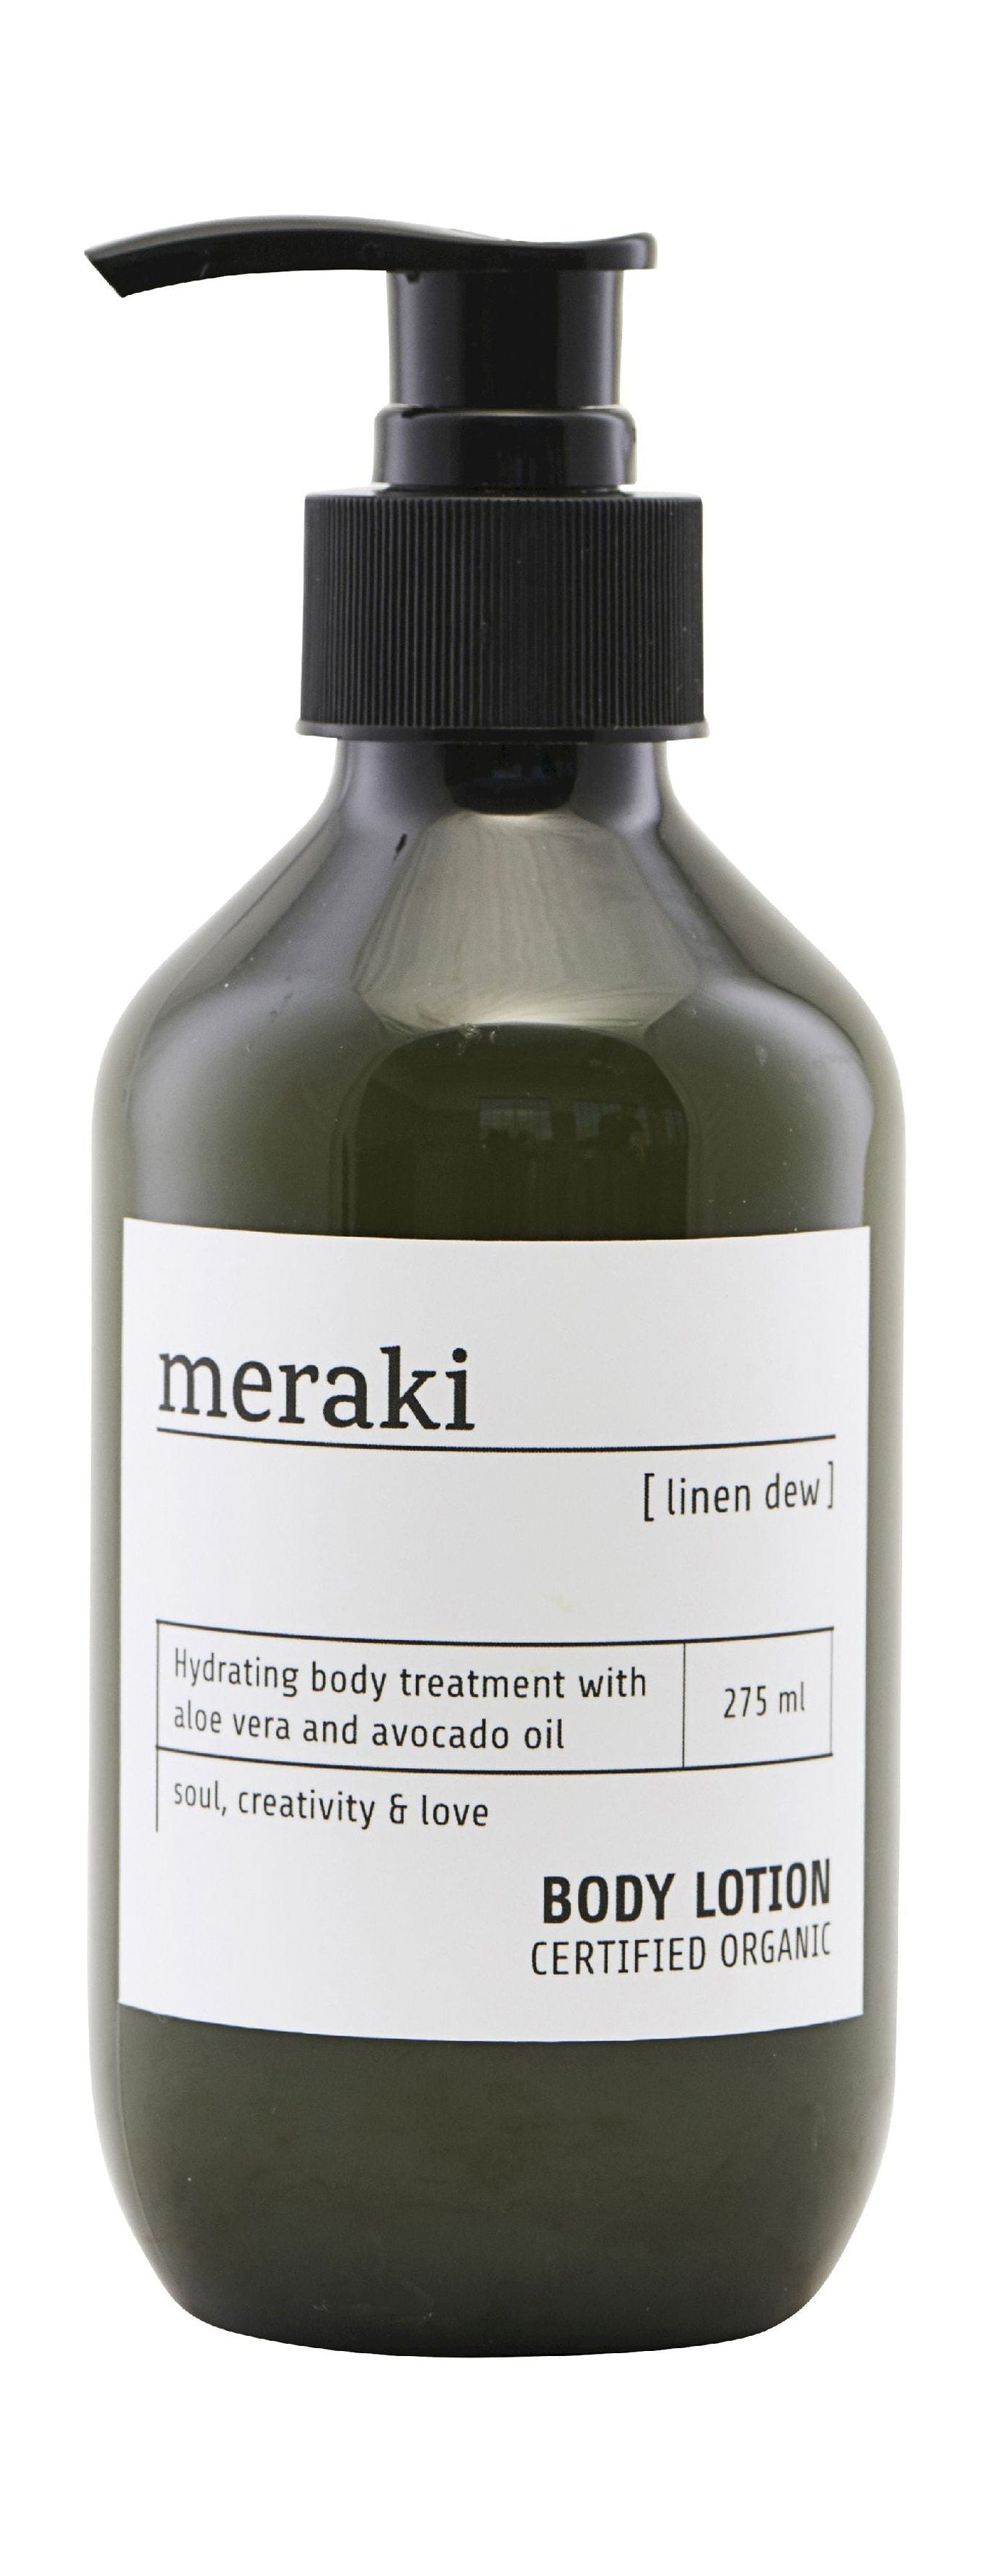 Meraki Lotion corporelle 275 ml, rosée en lin